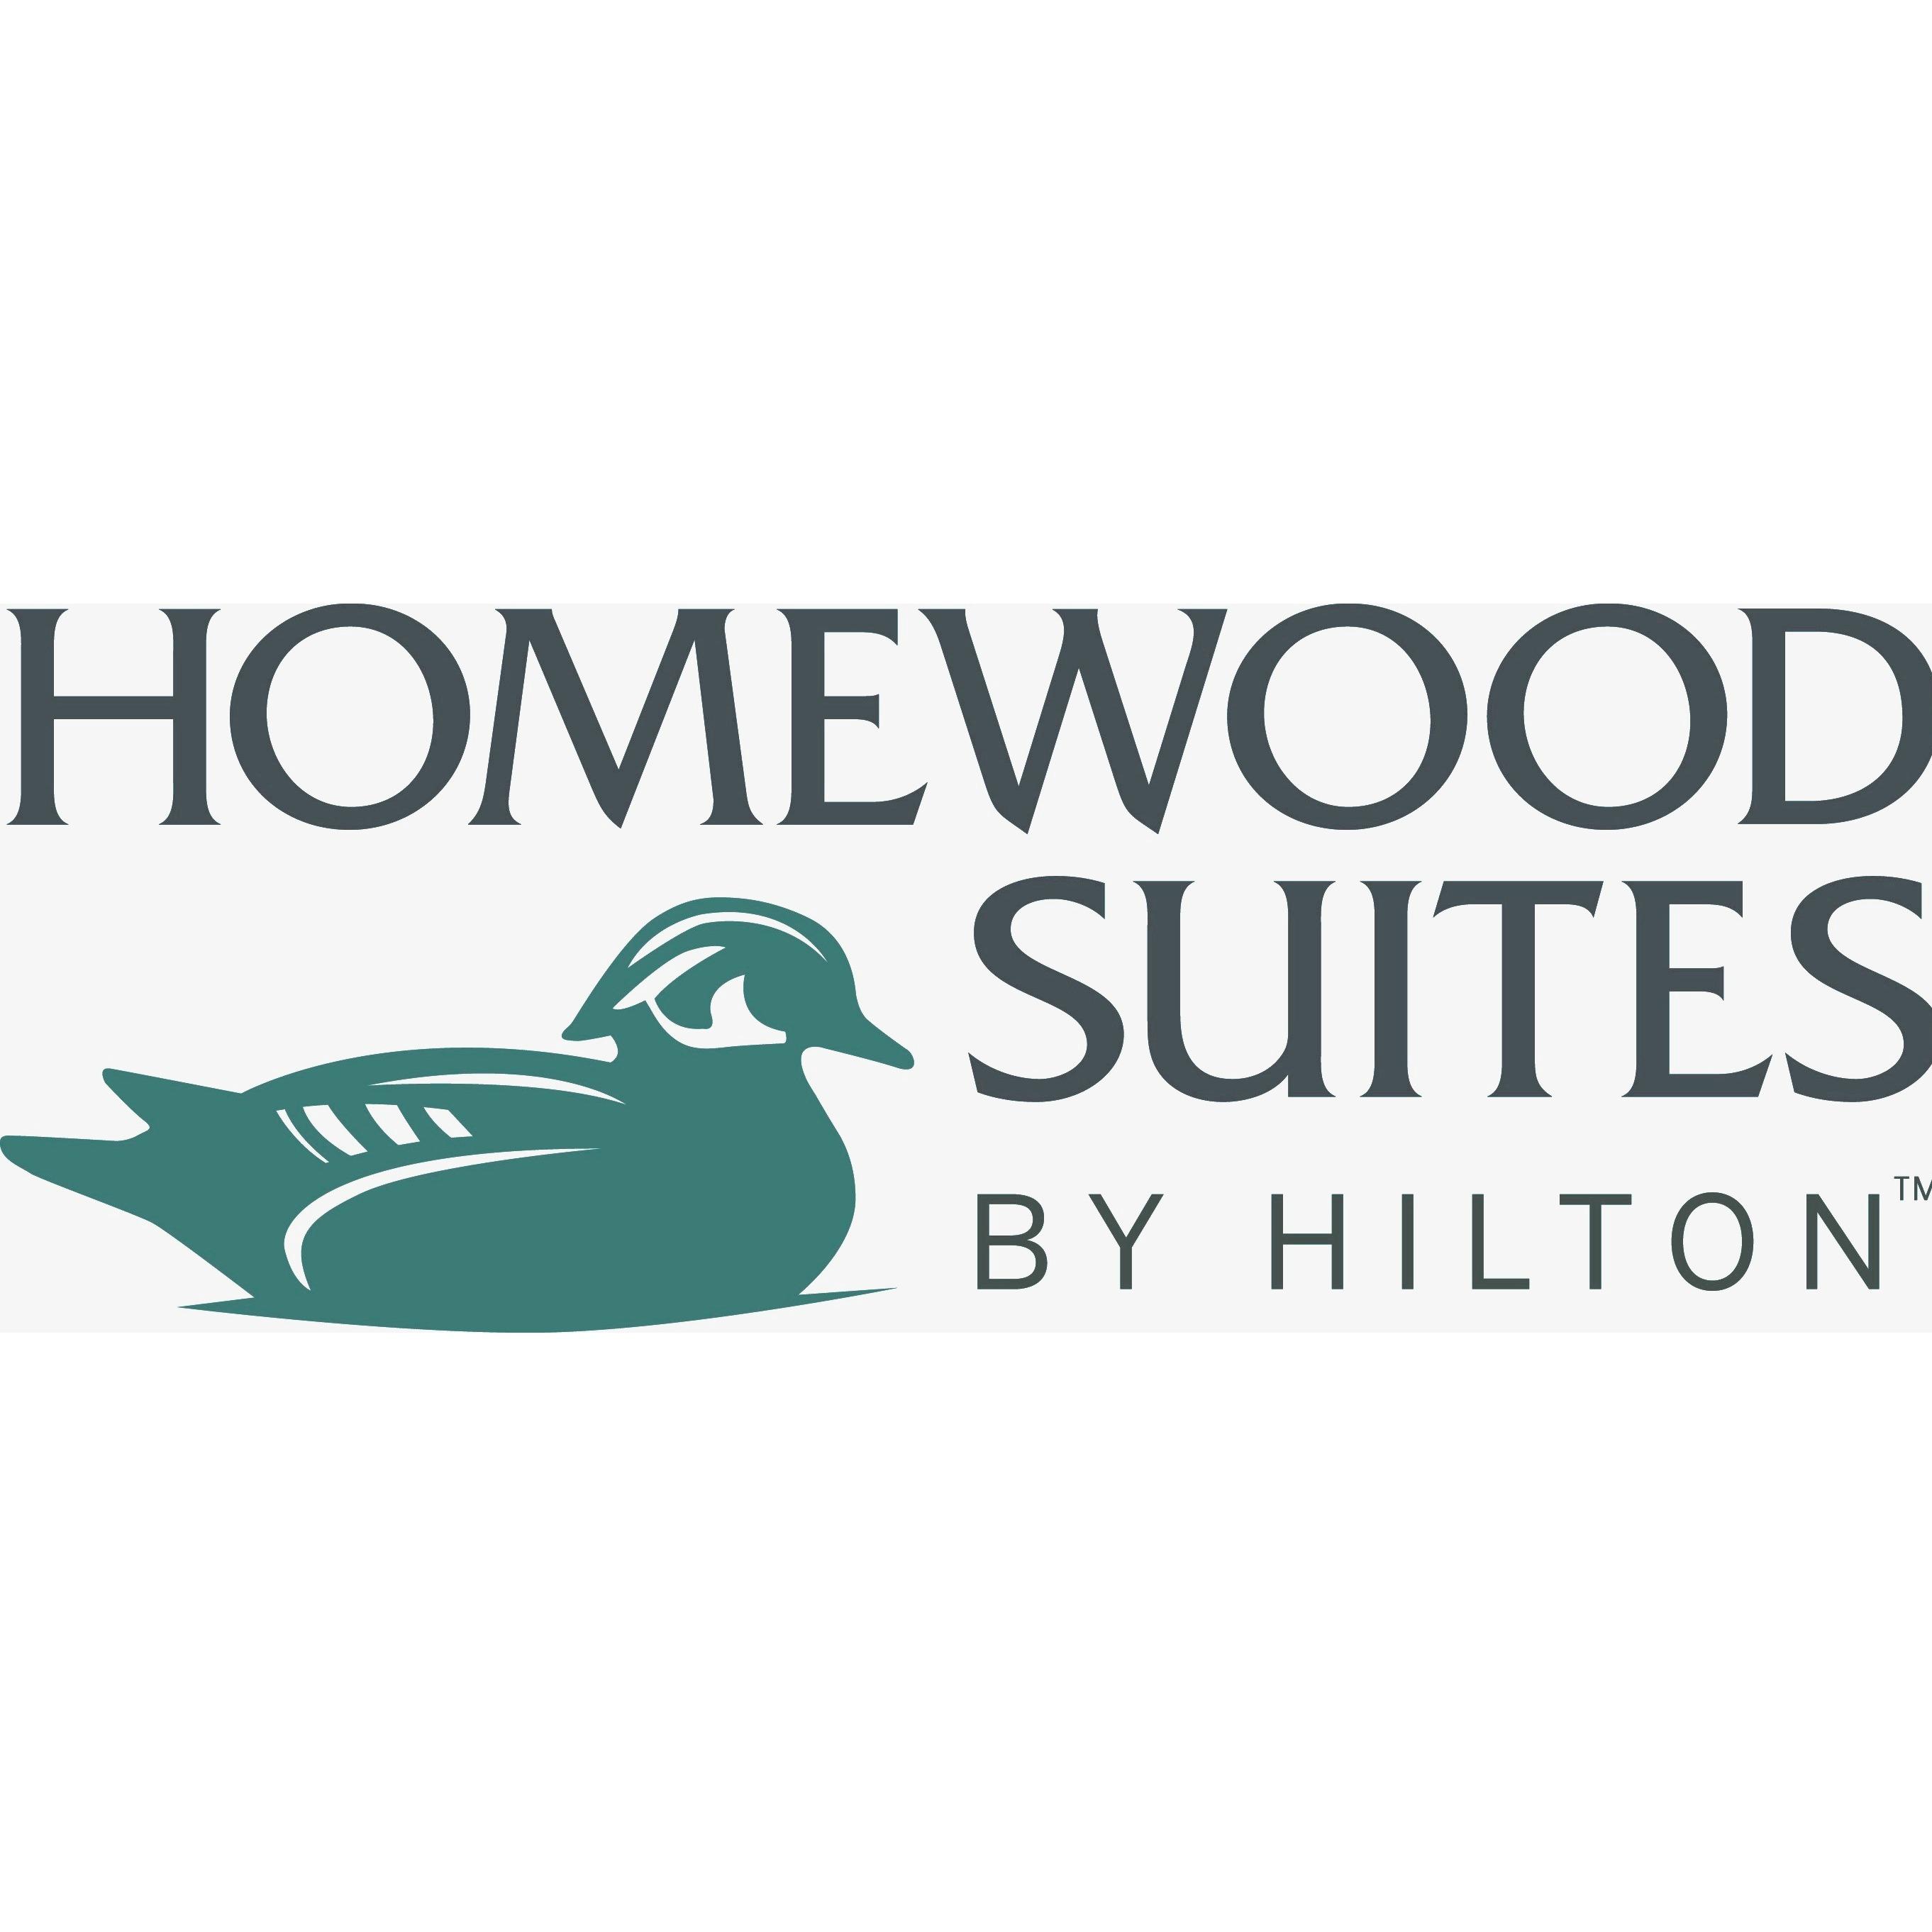 Homewood Suites by Hilton Miami Downtown/Brickell - Miami, FL 33129 - (305)285-7112 | ShowMeLocal.com